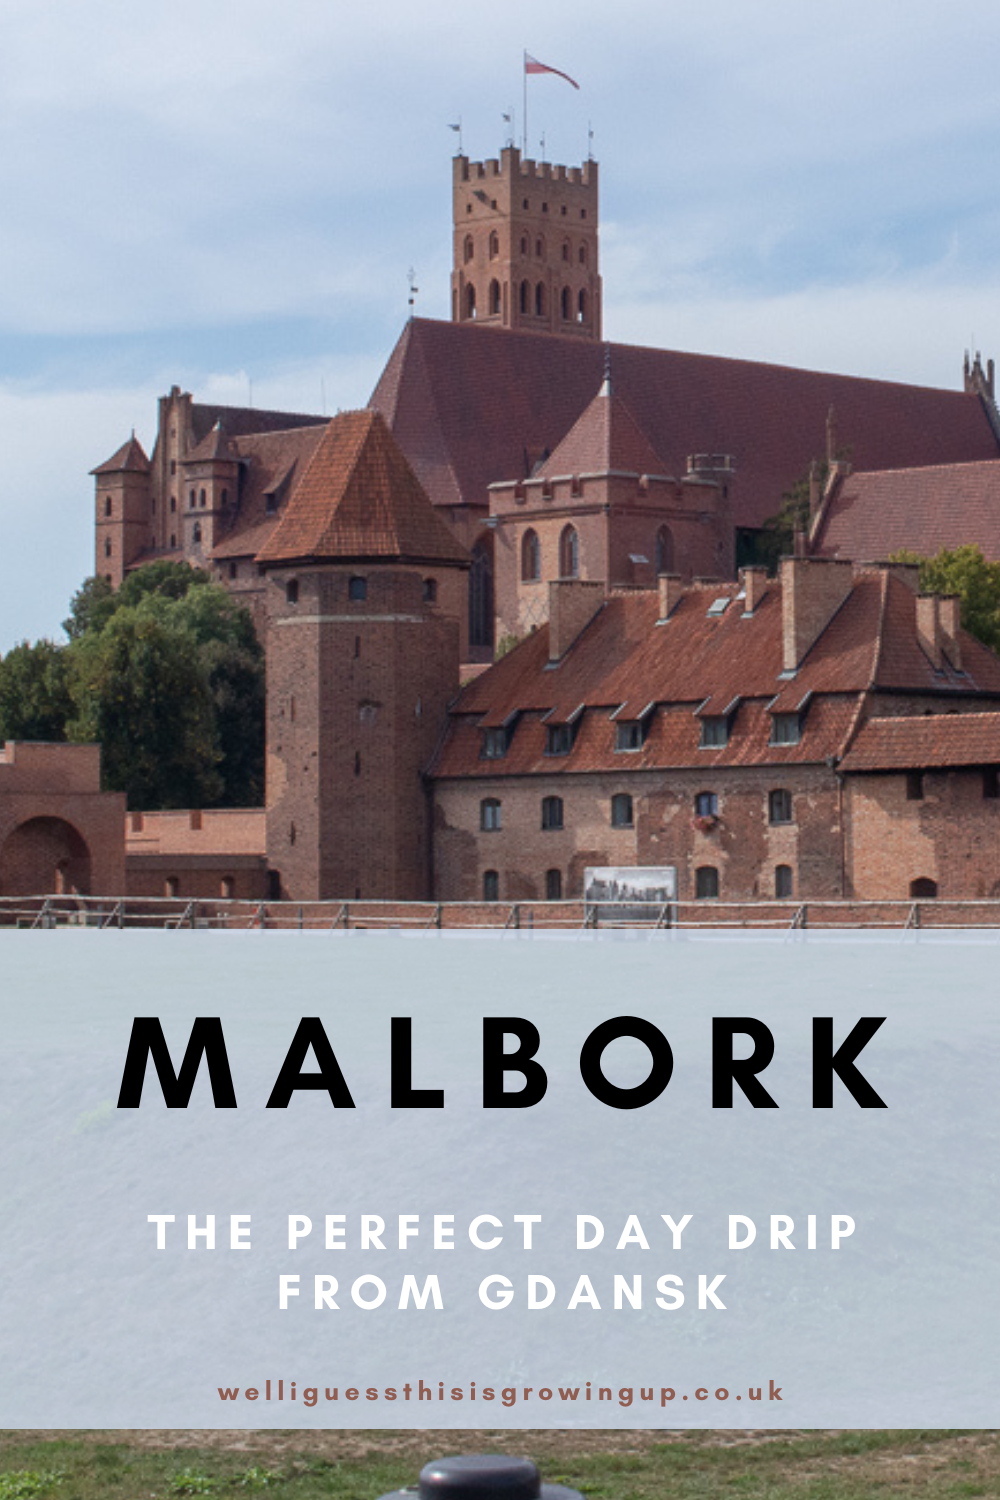 Is Malbork worth a visit?